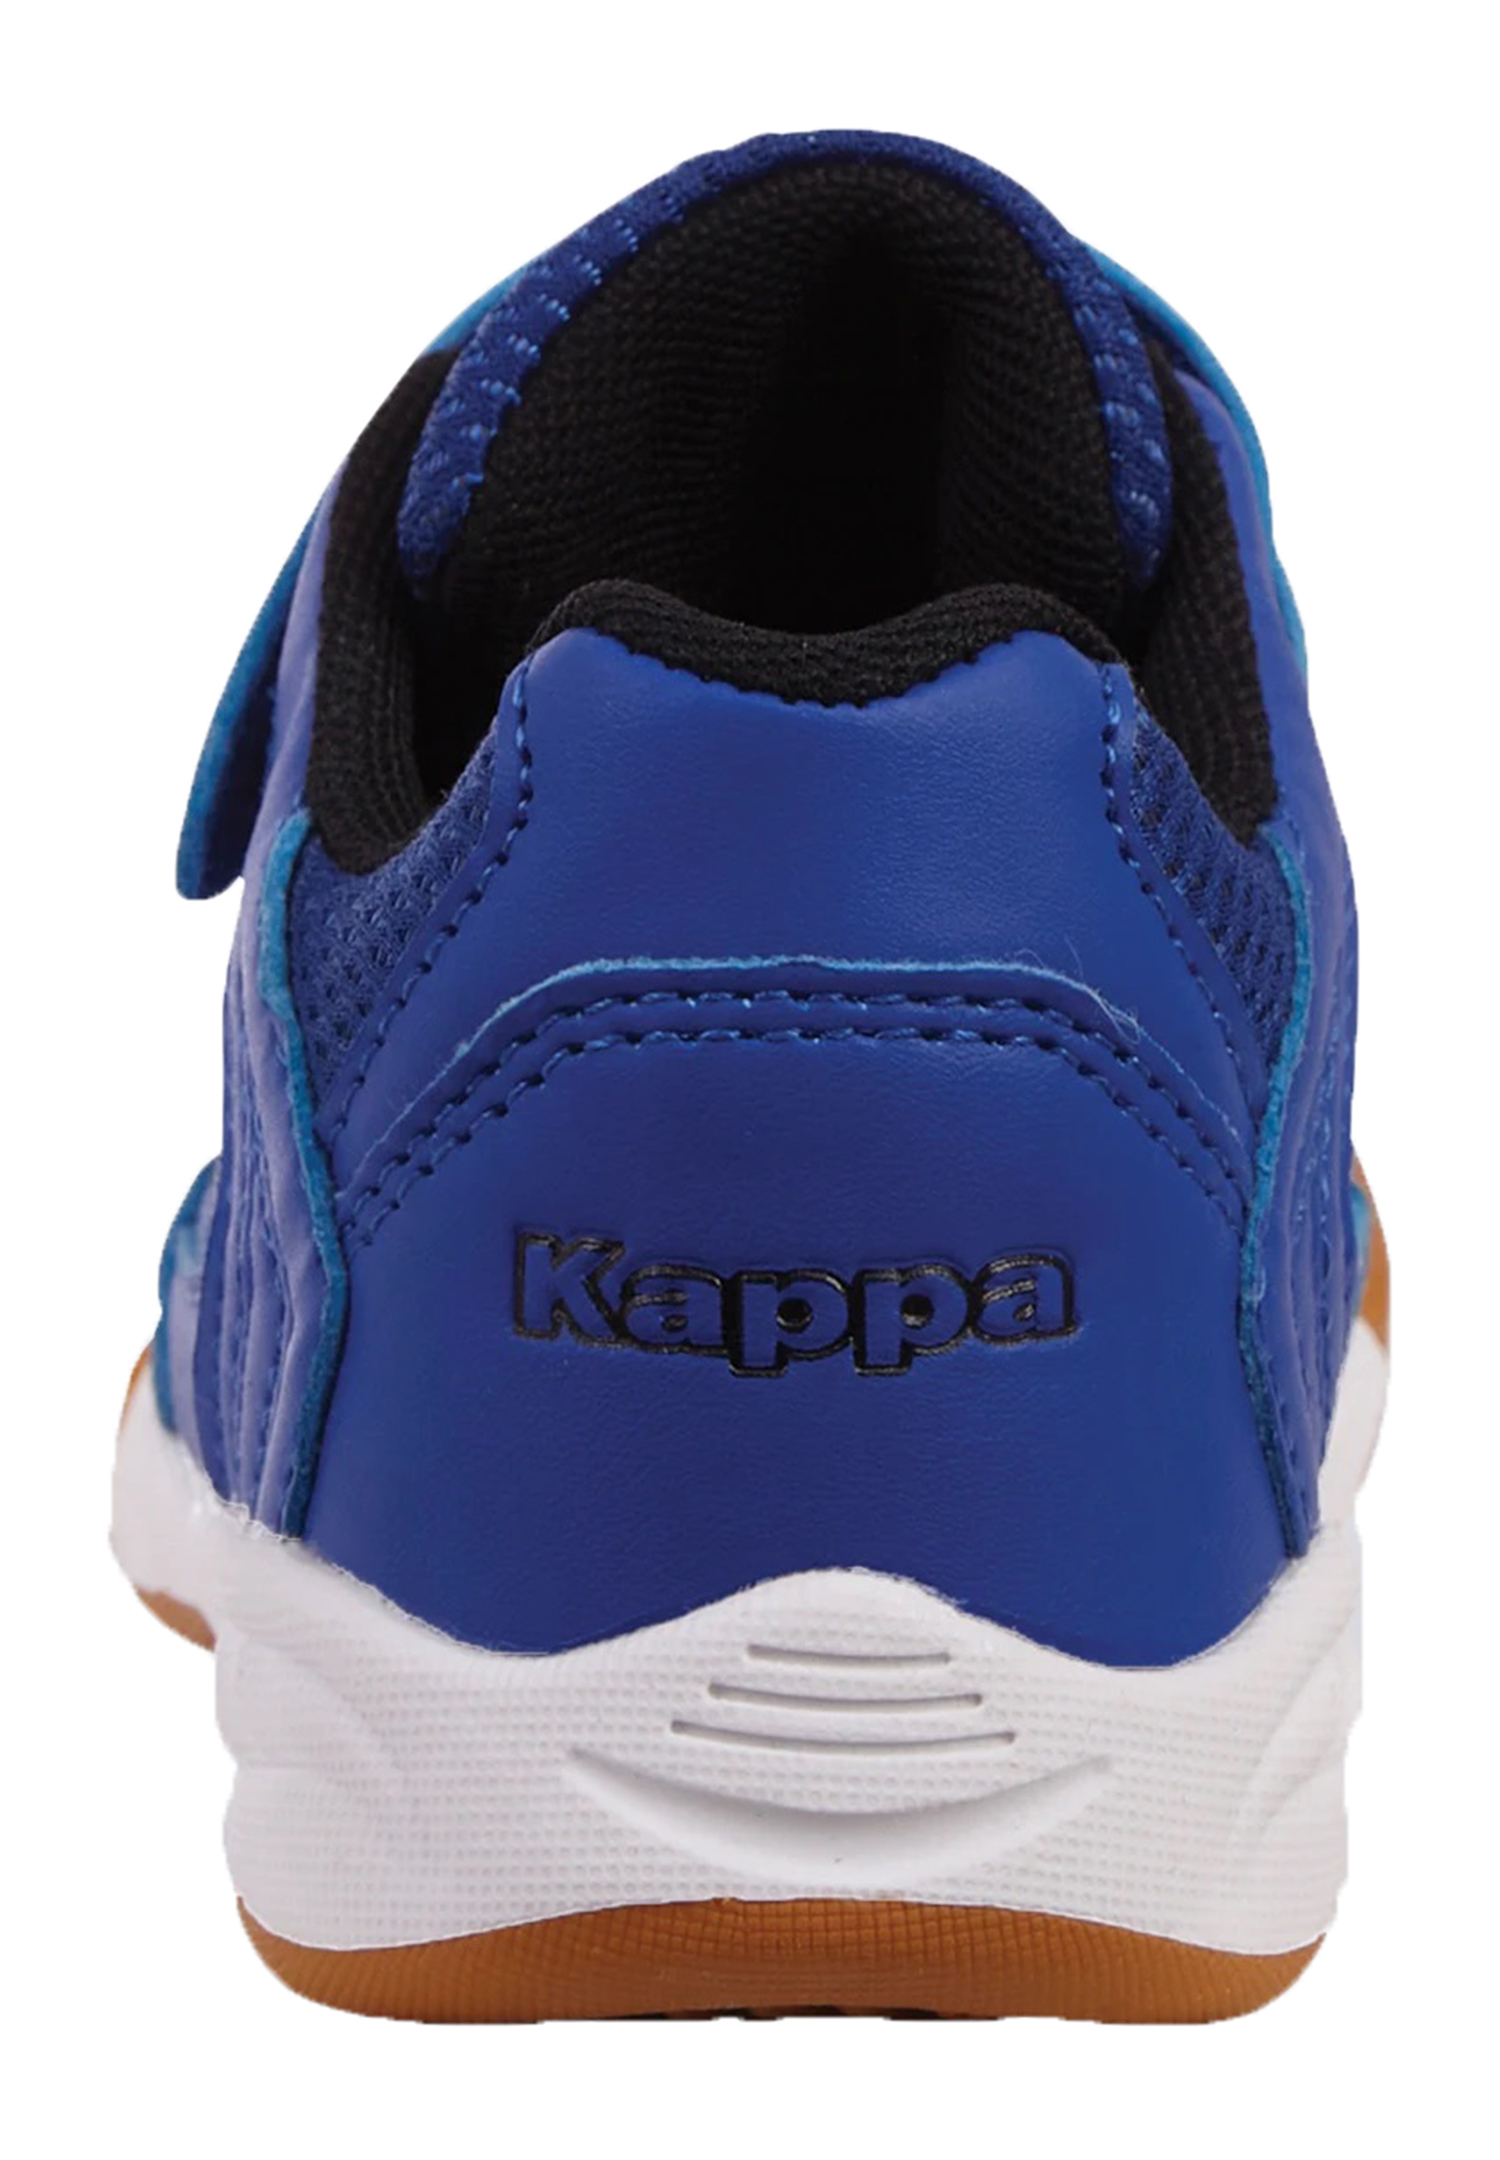 Kappa Kinder Sneaker Turnschuh 260765K 6011 blau